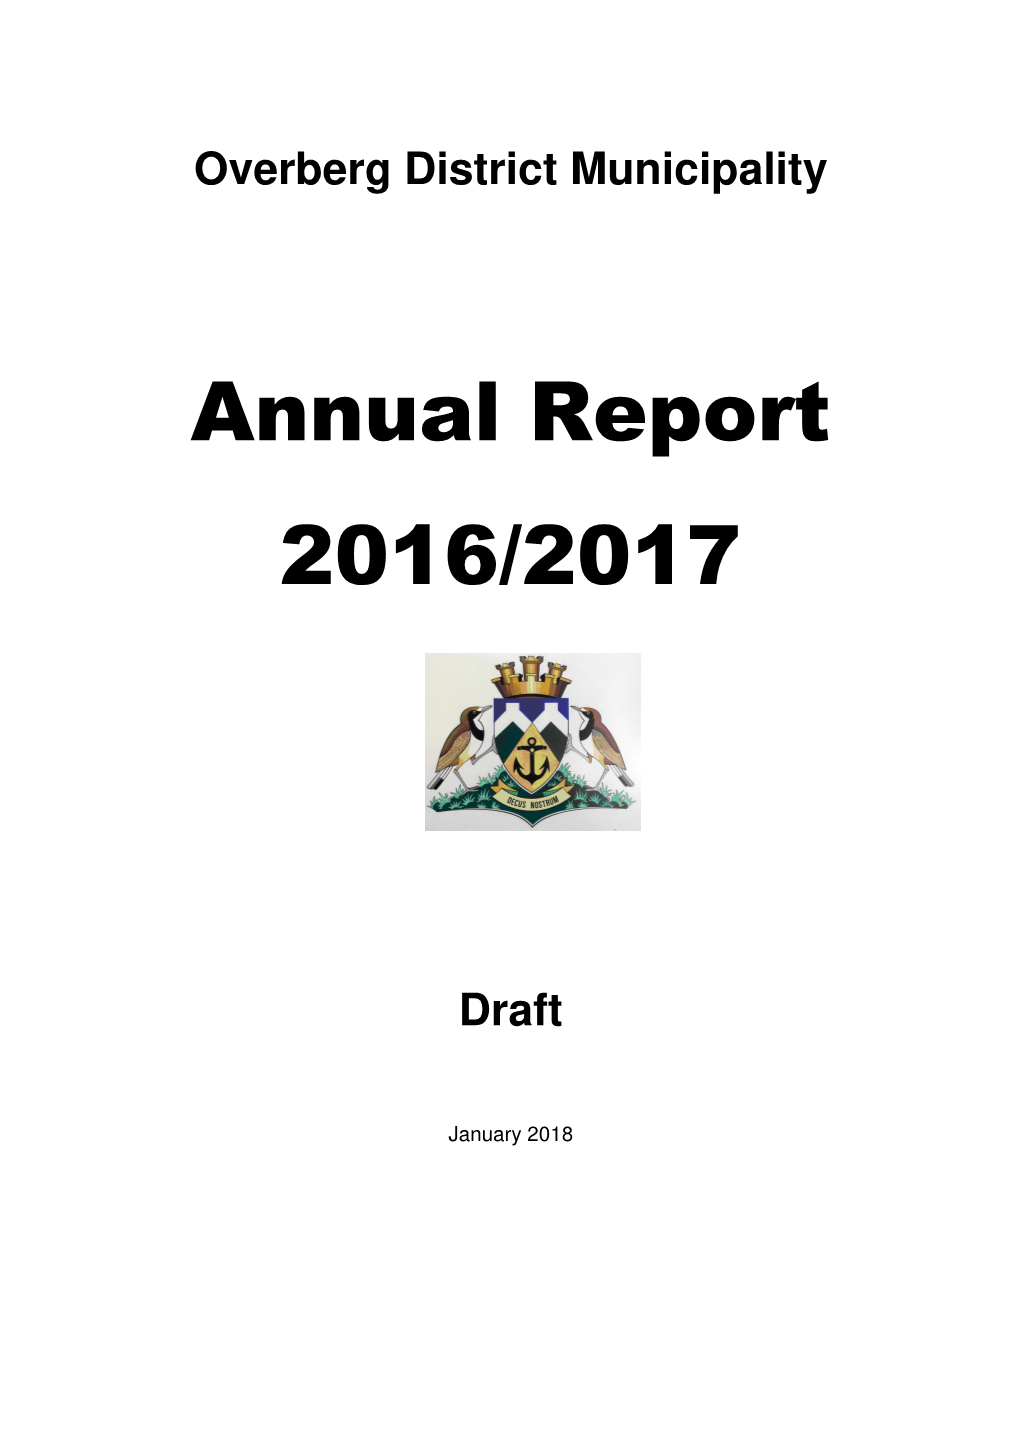 Draft Annual Report 2016-2017